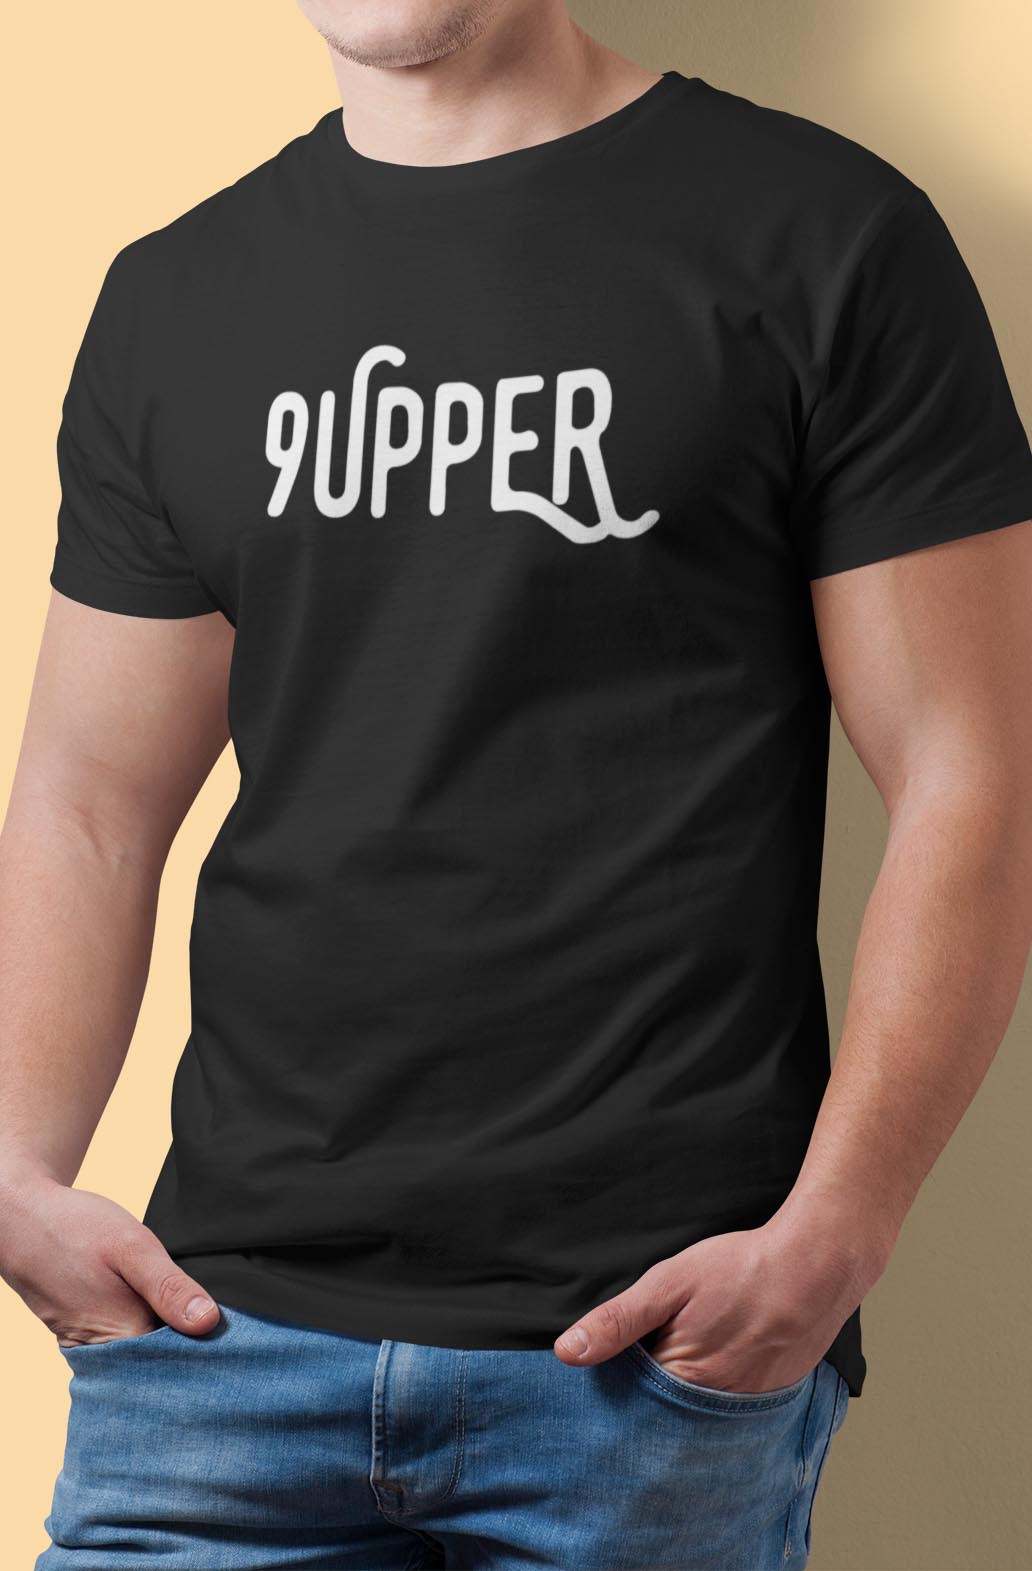 9UPPER T-shirt設計